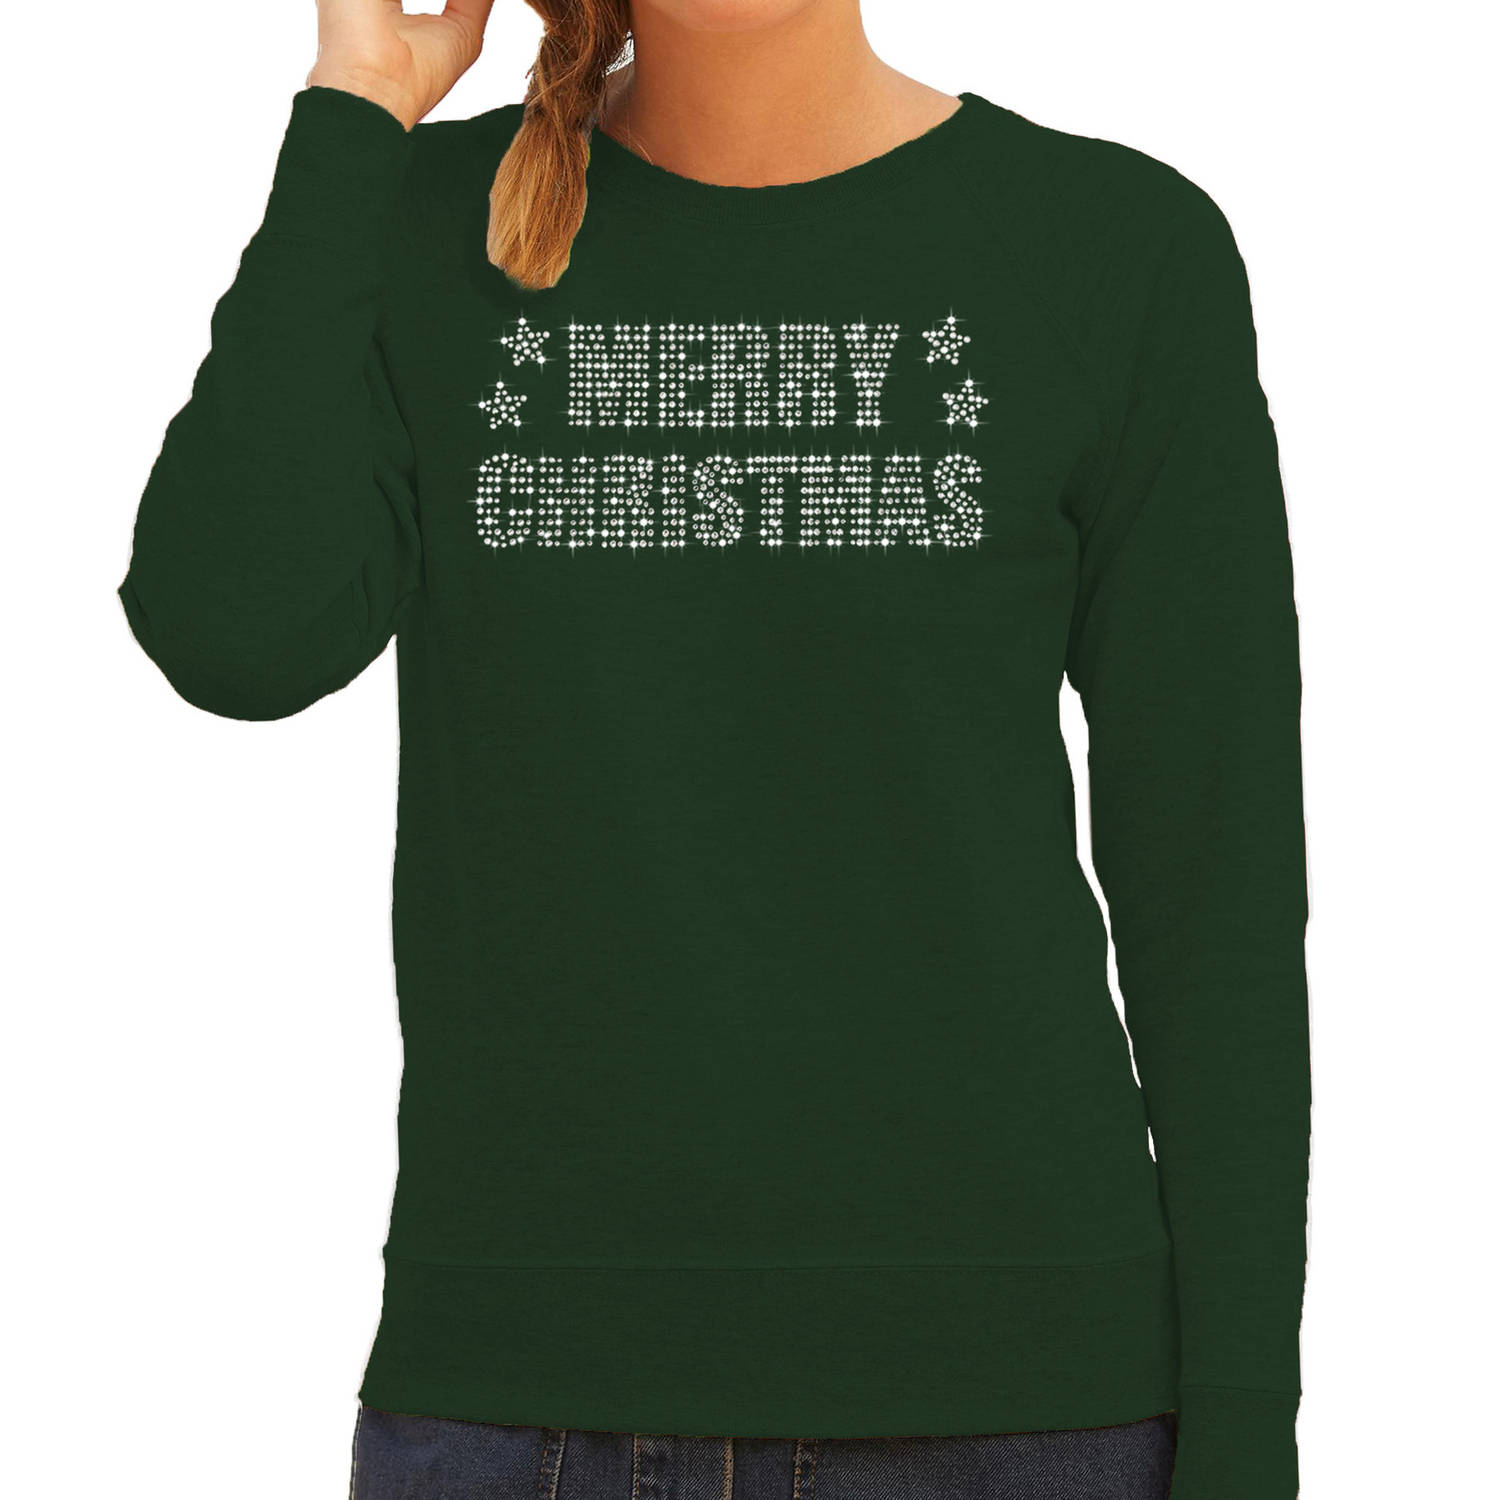 Glitter foute kersttrui groen Merry Christmas glitter steentjes voor dames - Glitter kerst outfit XL - kerst truien